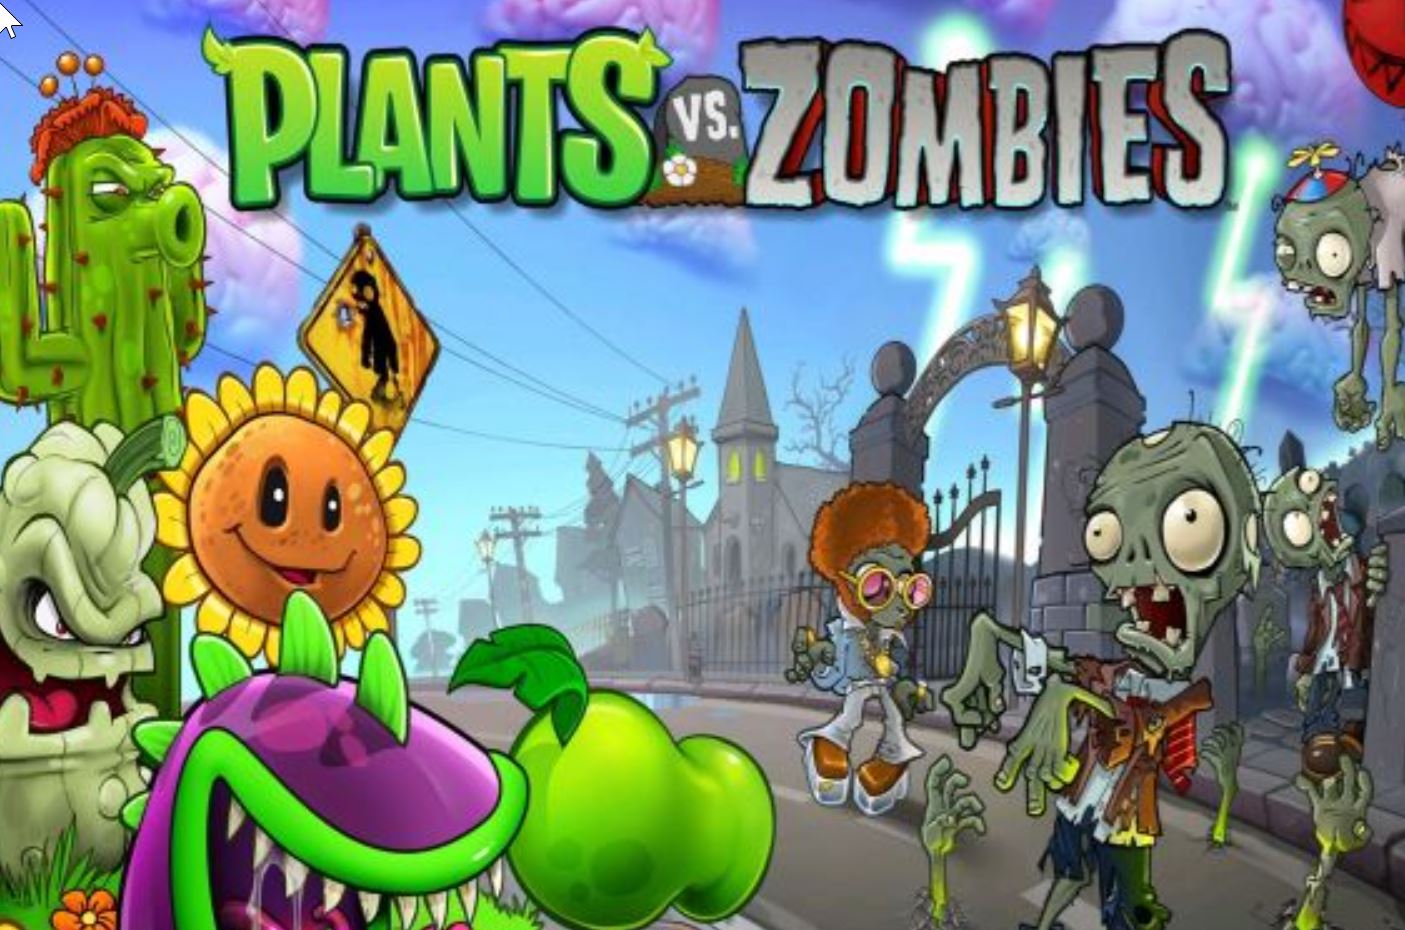 plants vs zombies slot